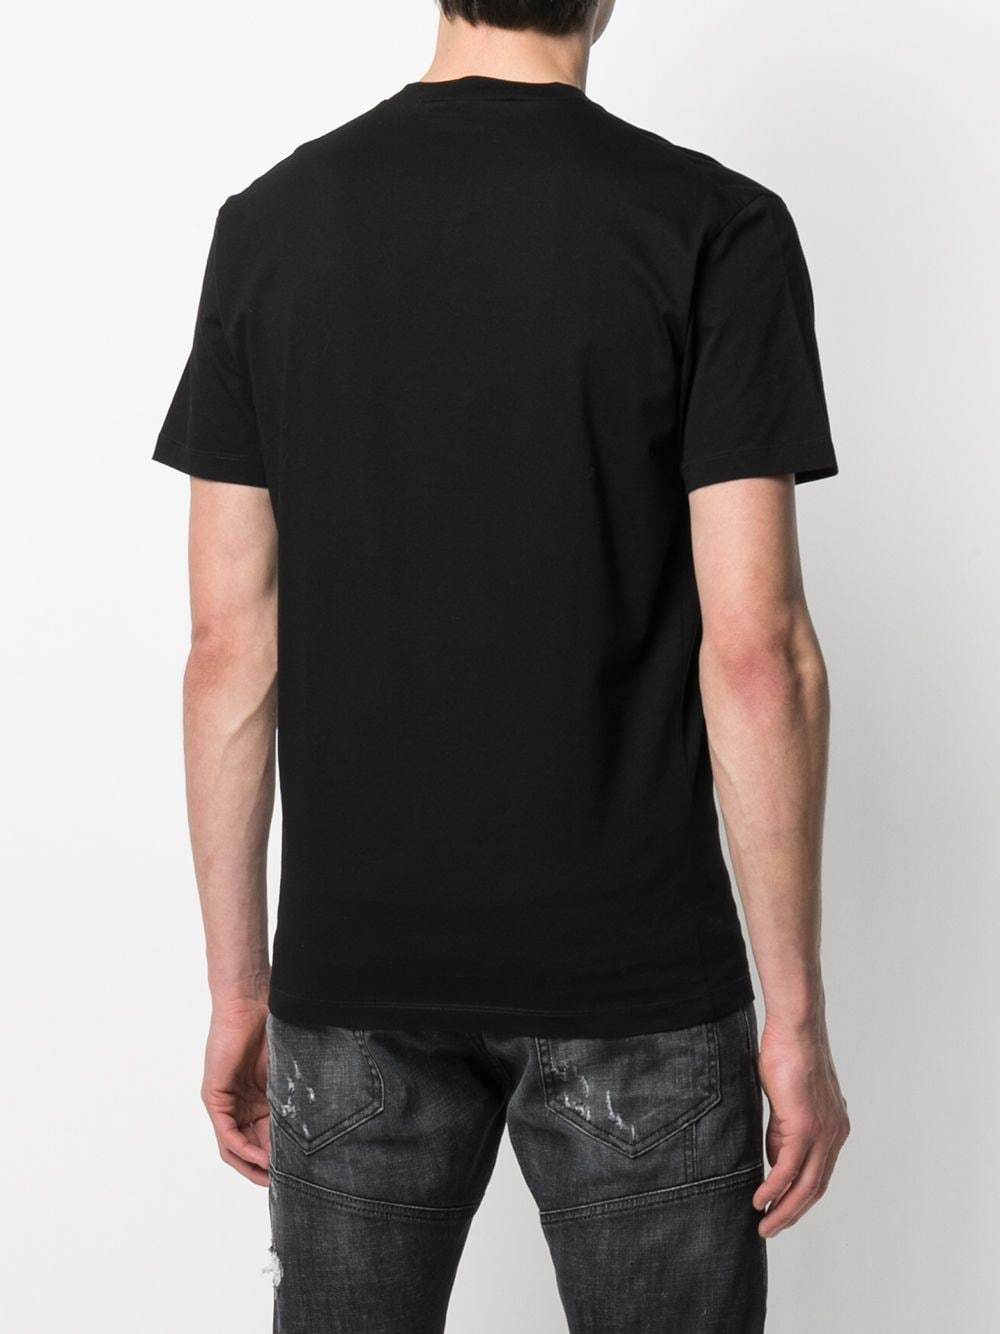 DSQUARED2 Small Reflective Icon Print T-Shirt Black - MAISONDEFASHION.COM